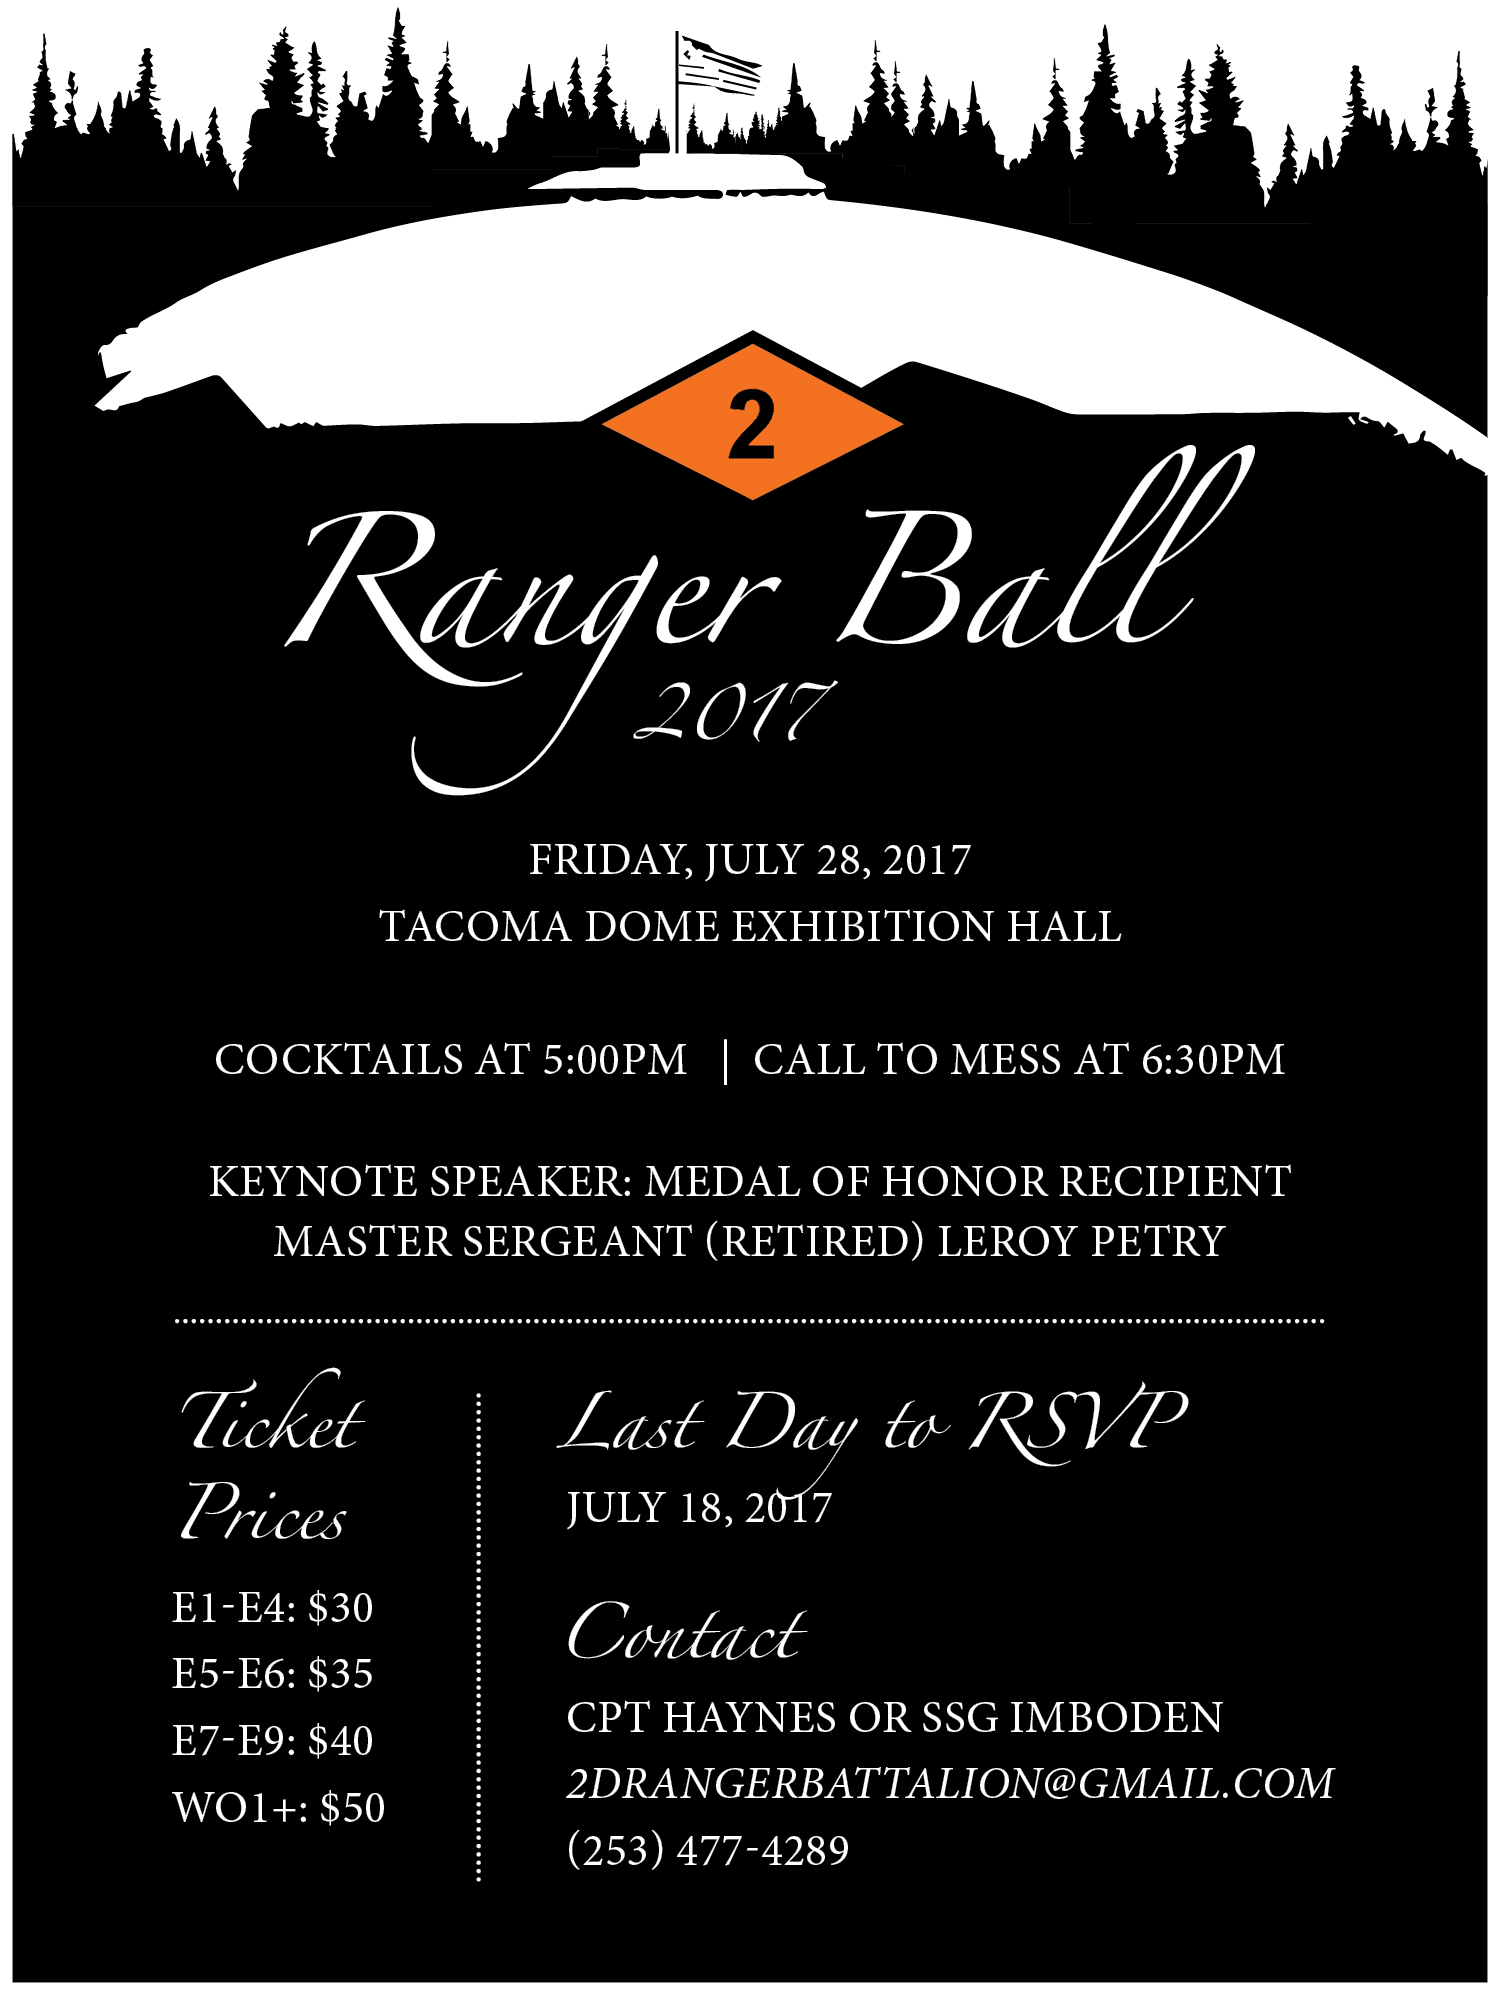 Ranger Ball